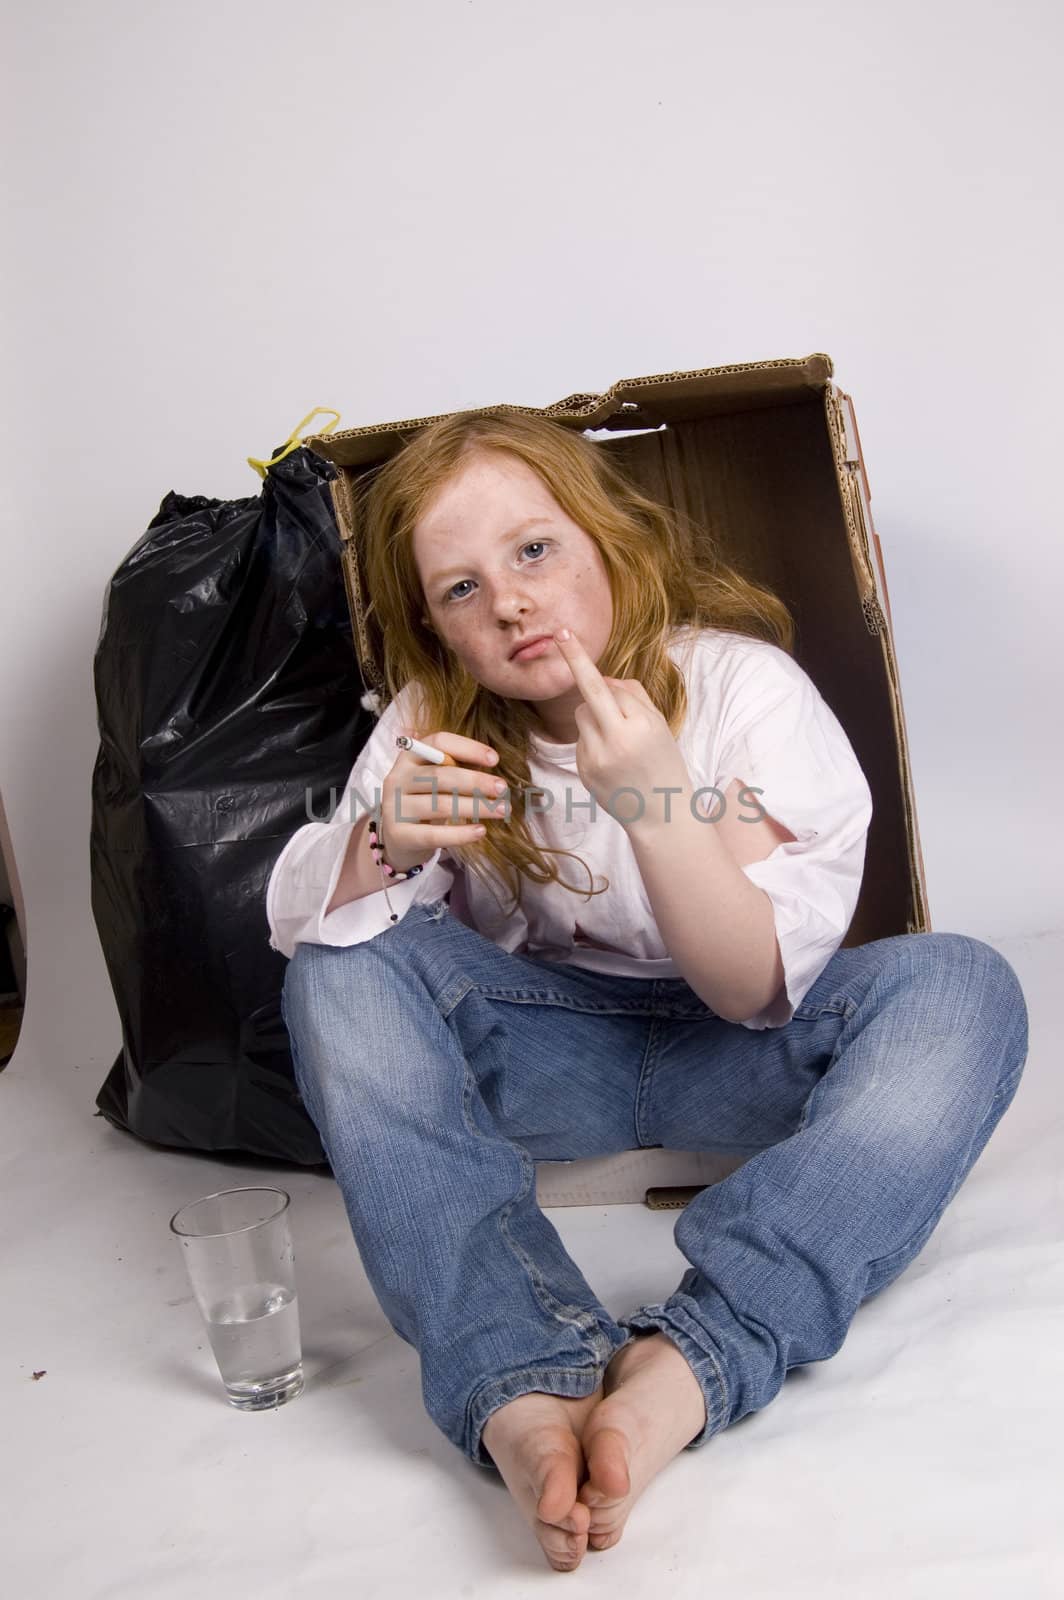 homeless girl showing the middle finger